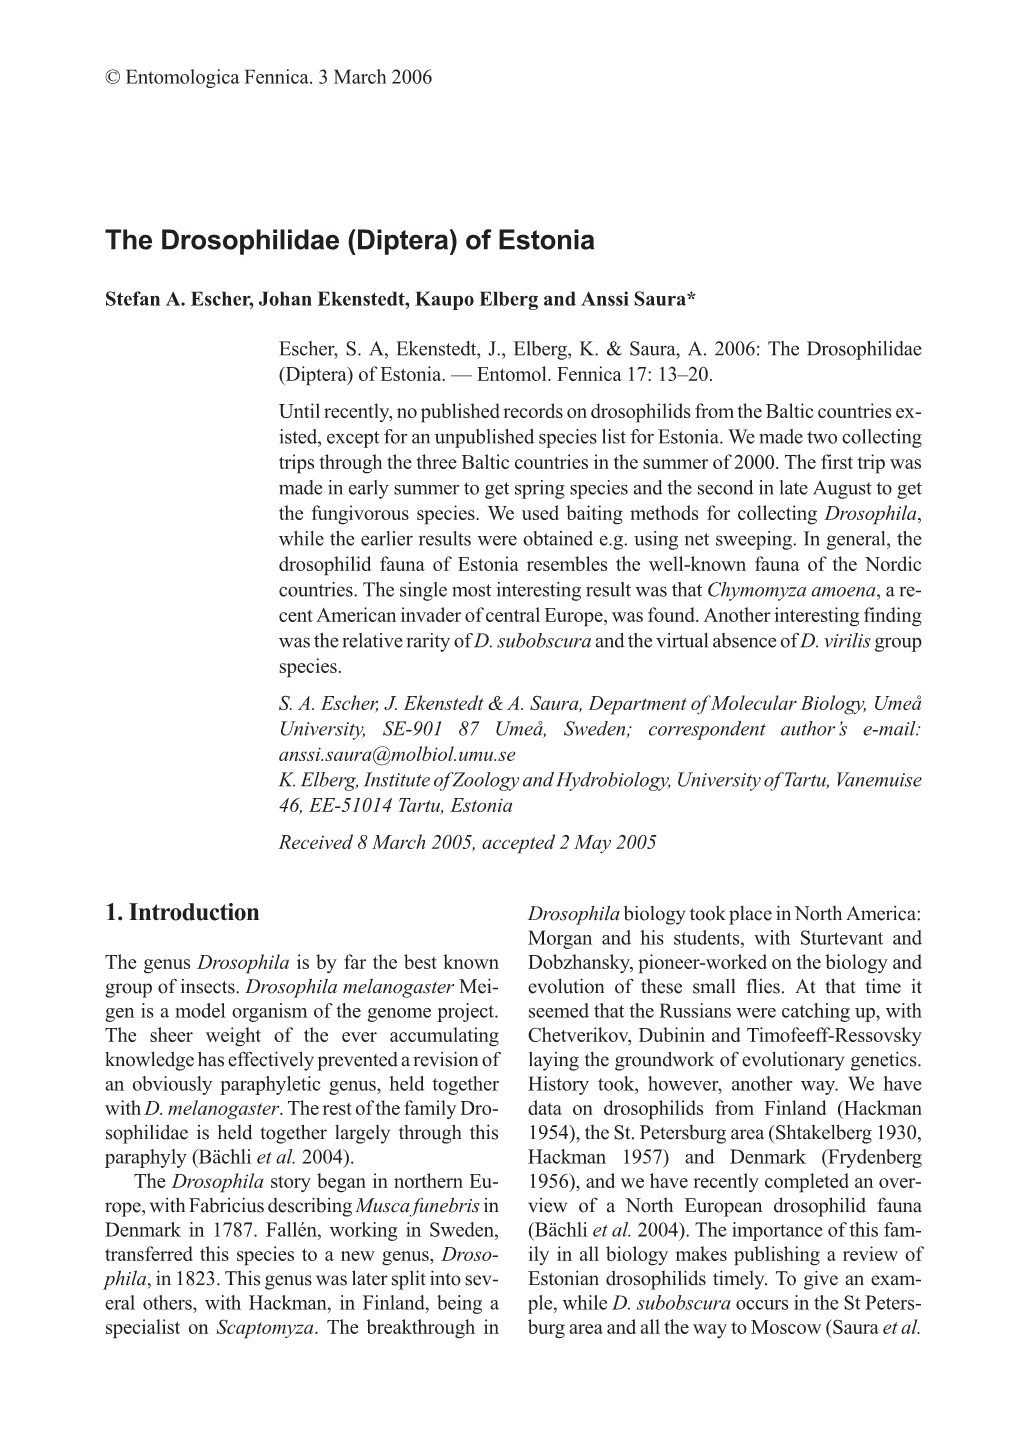 The Drosophilidae (Diptera) of Estonia